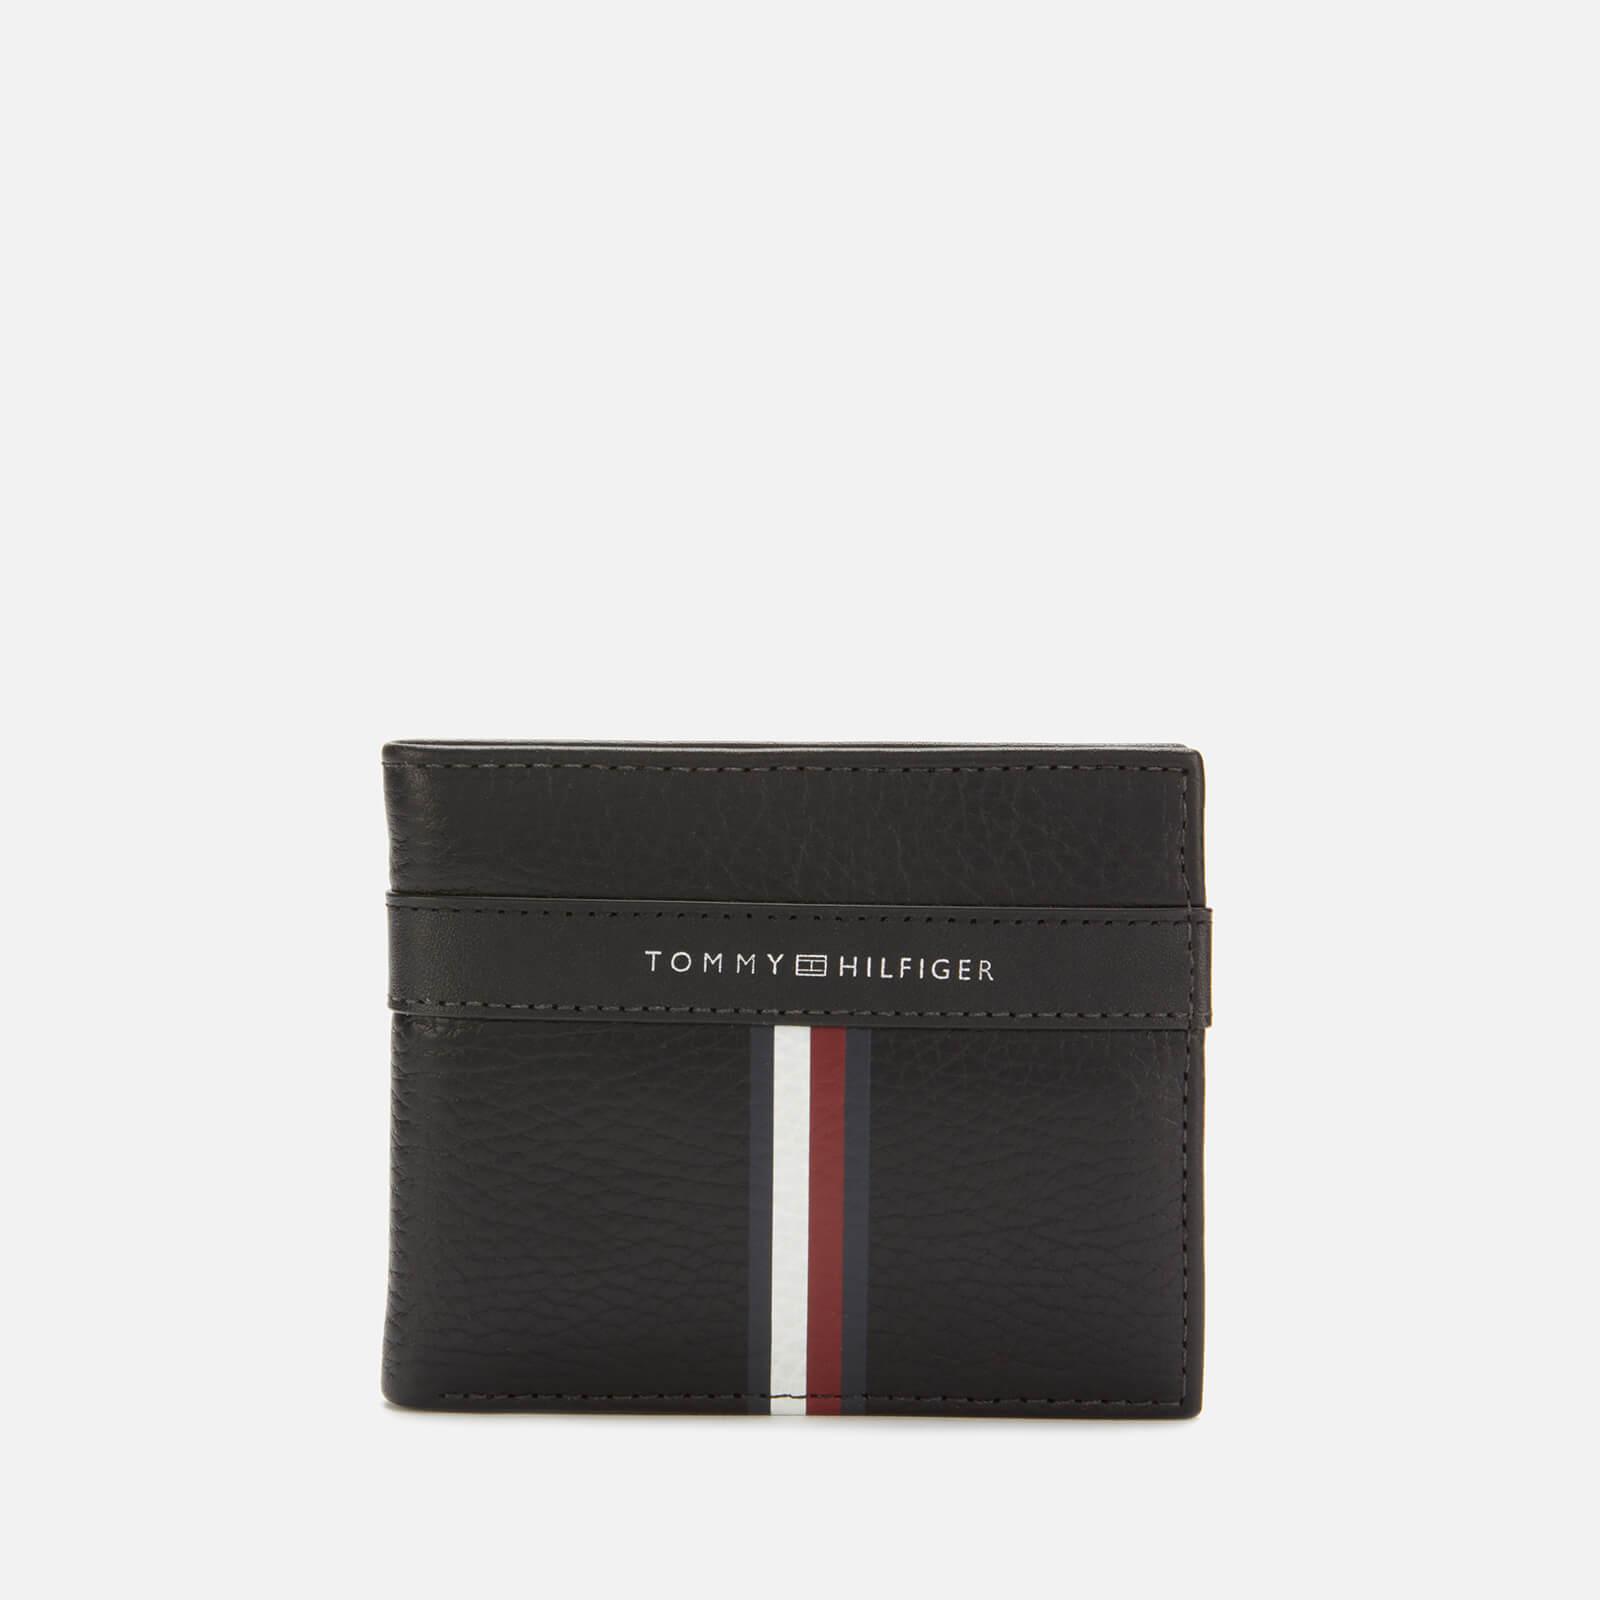 Tommy Hilfiger Johnson Mini Cc Wallet Store - rivetticafe.it 1694953999